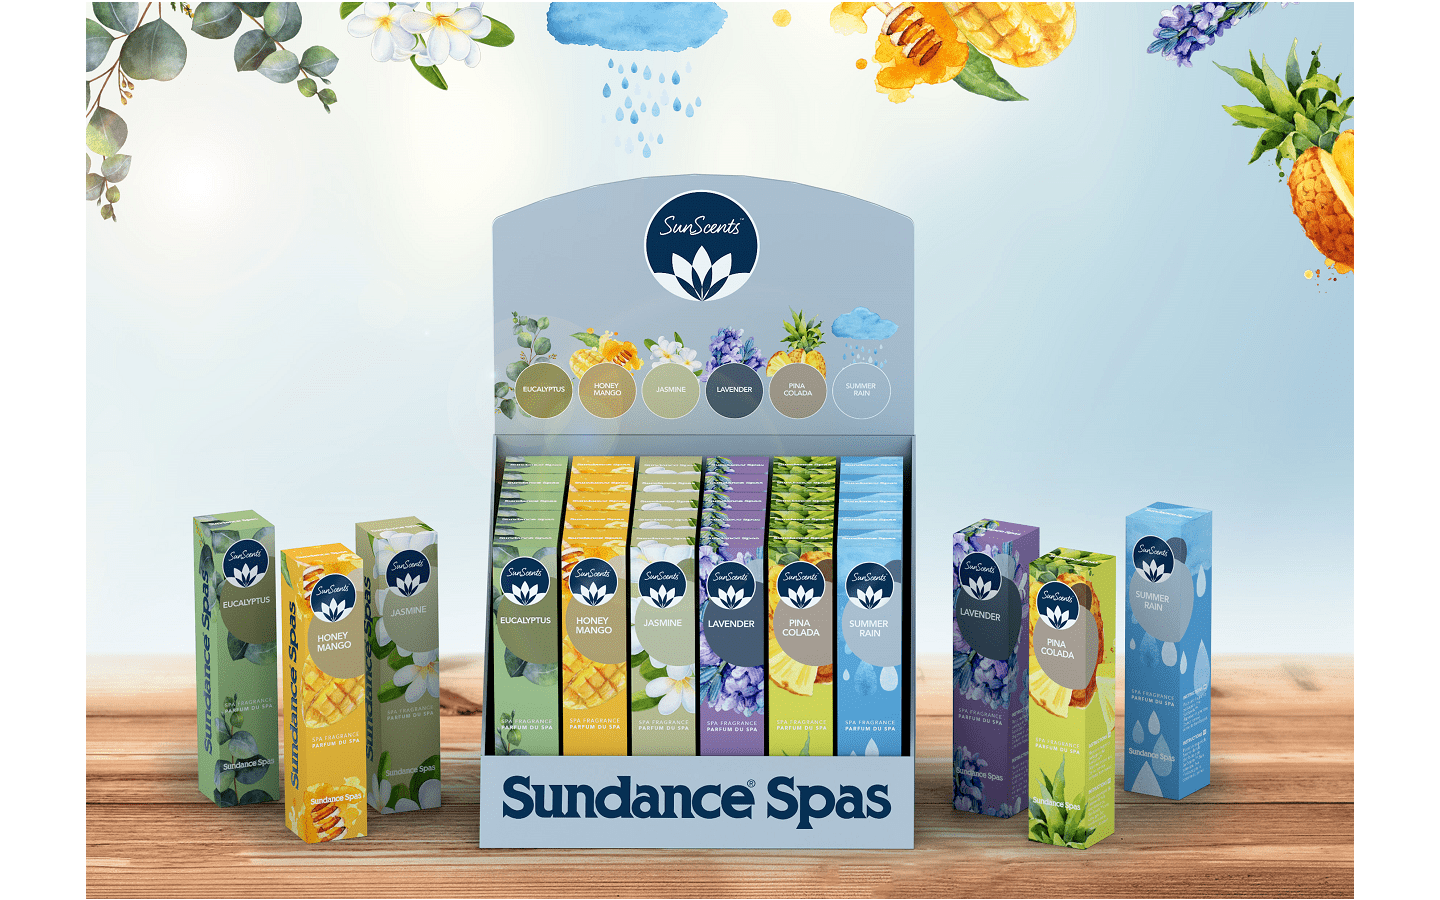 Sundance Spas SunScents